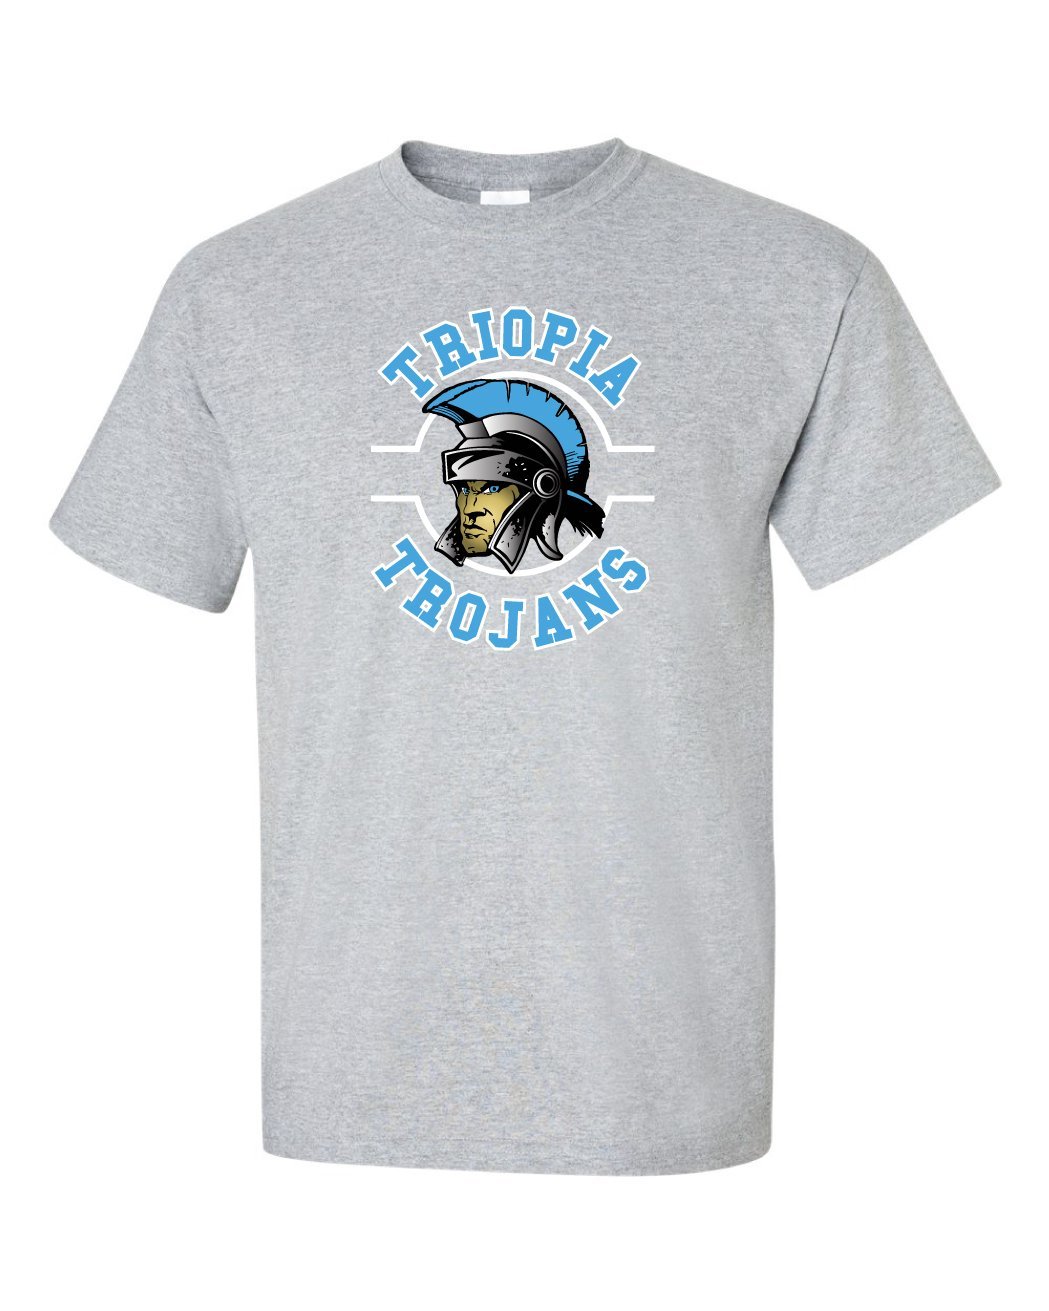 Triopia Trojans T-Shirt